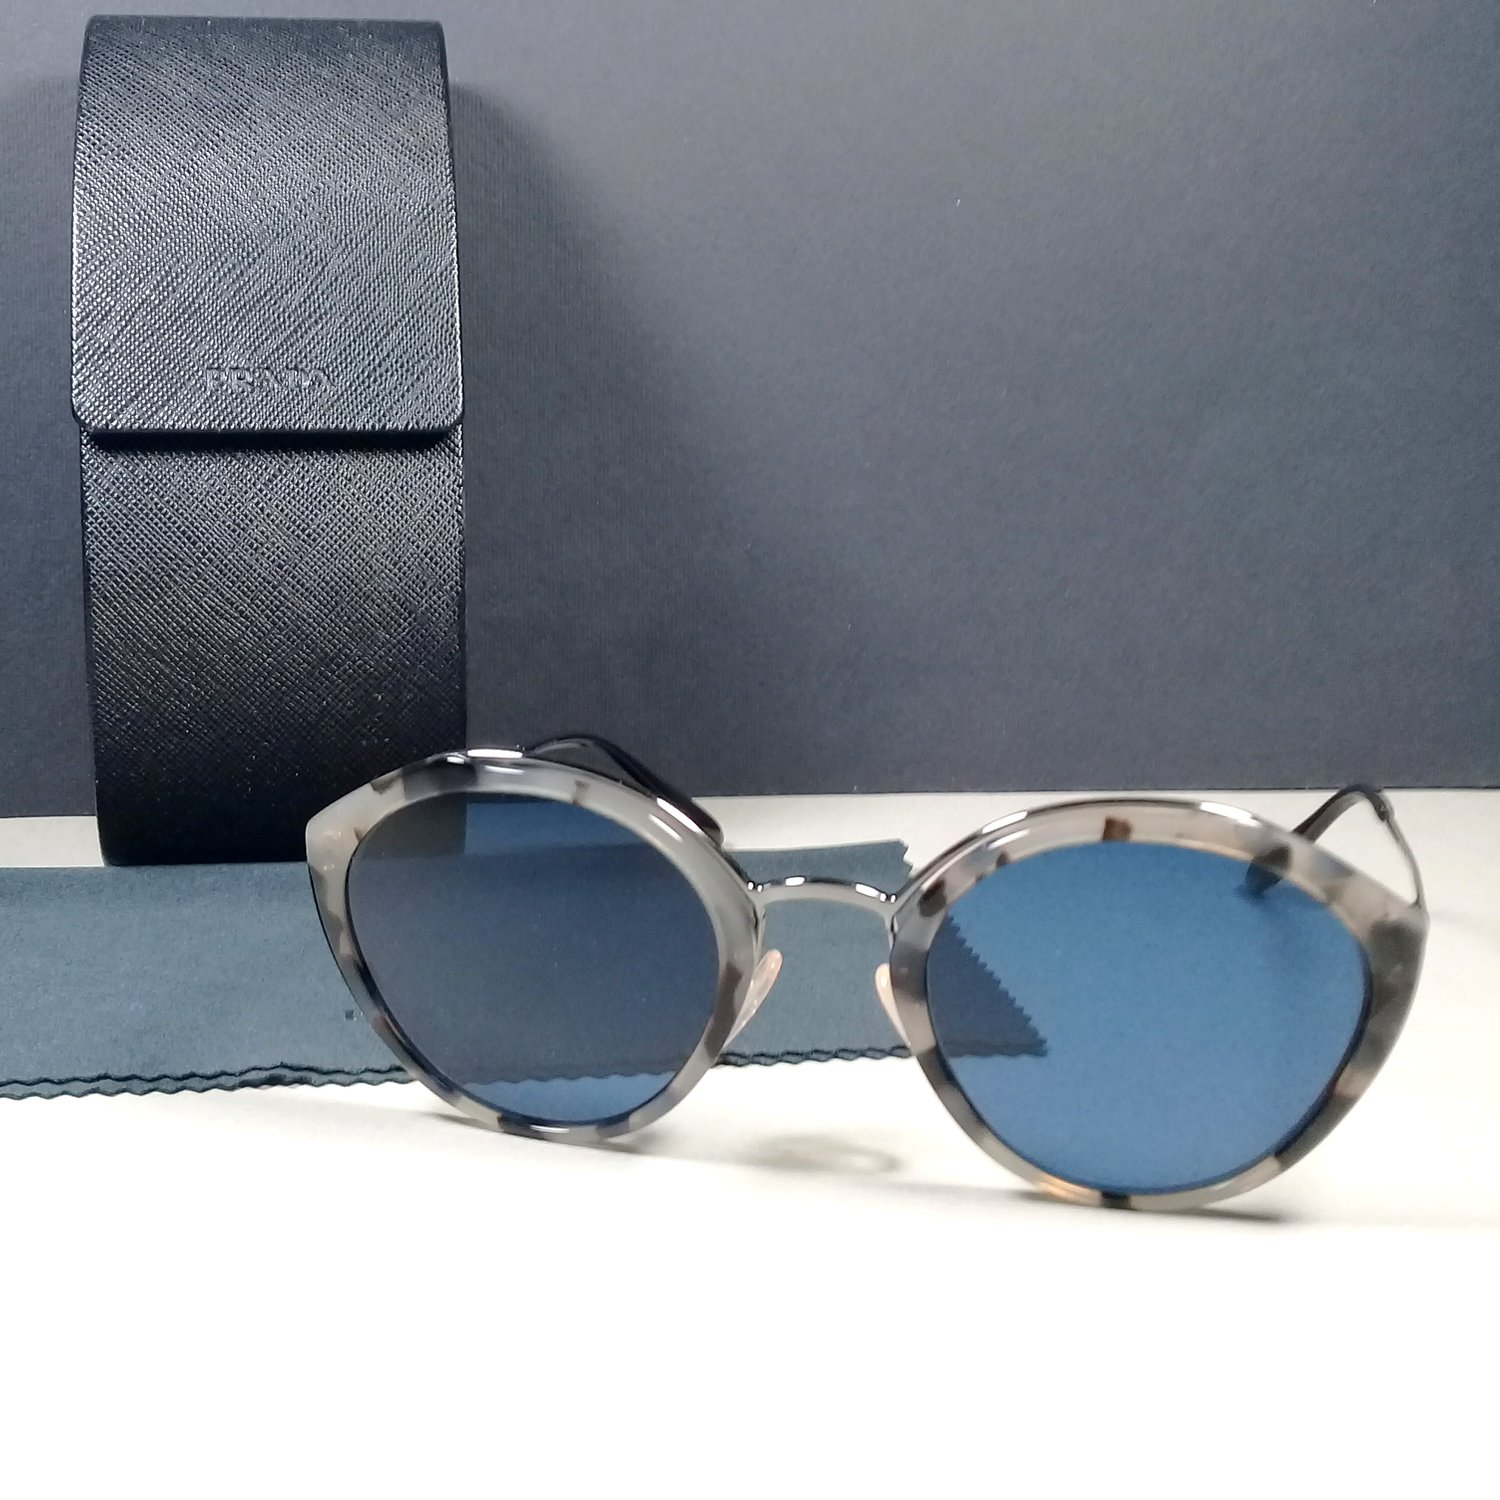 Prada SPR 18U HU7-219 Black/Gray Designer Women's Sunglasses in Case